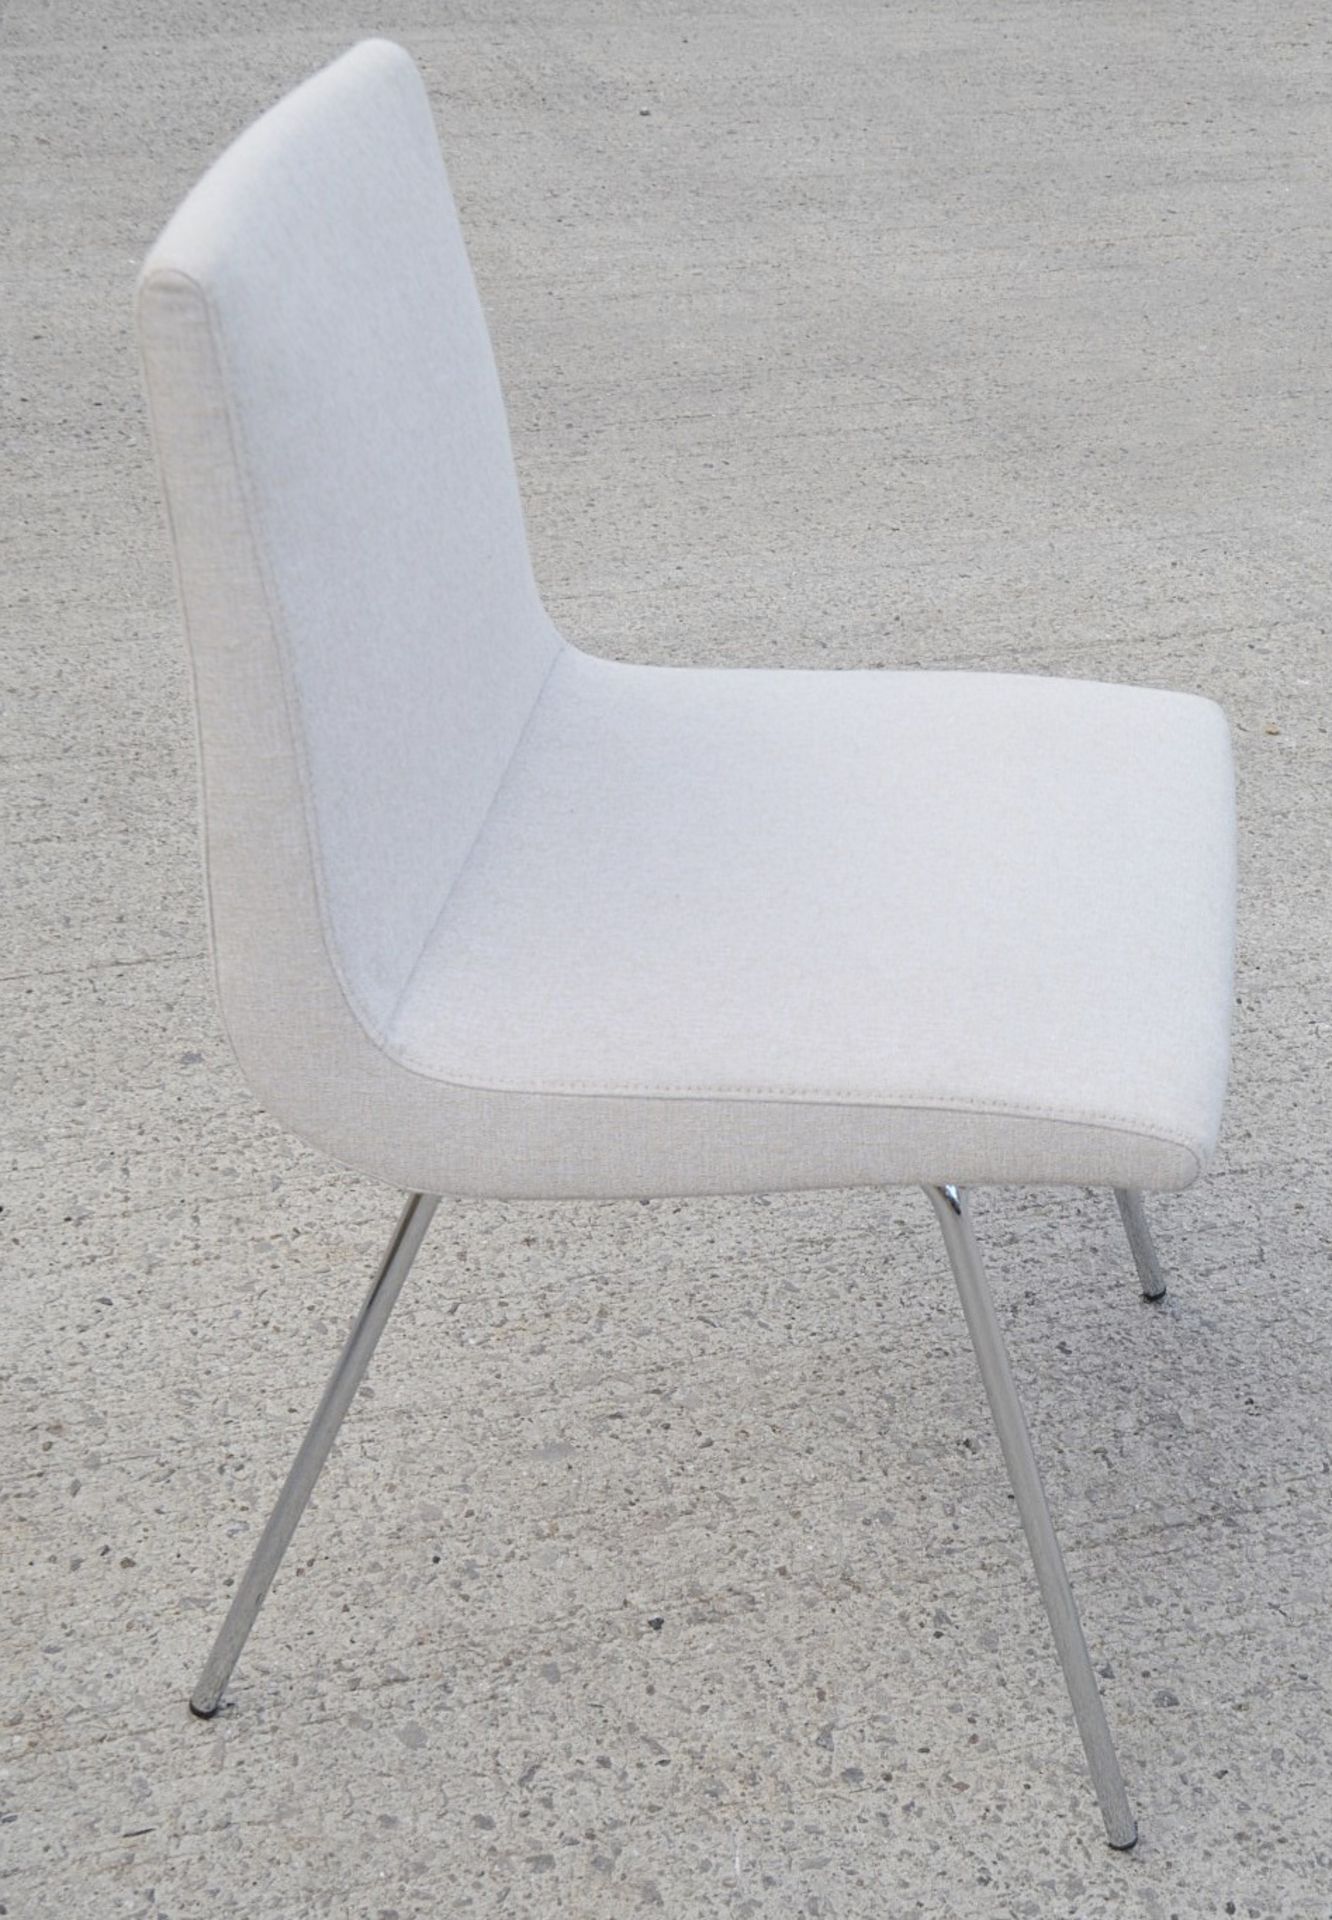 Pair Of LIGNE ROSET 'TV' Designer Dining Chairs In A Light Neutral Beige Fabric & Chromed Steel Legs - Image 2 of 9